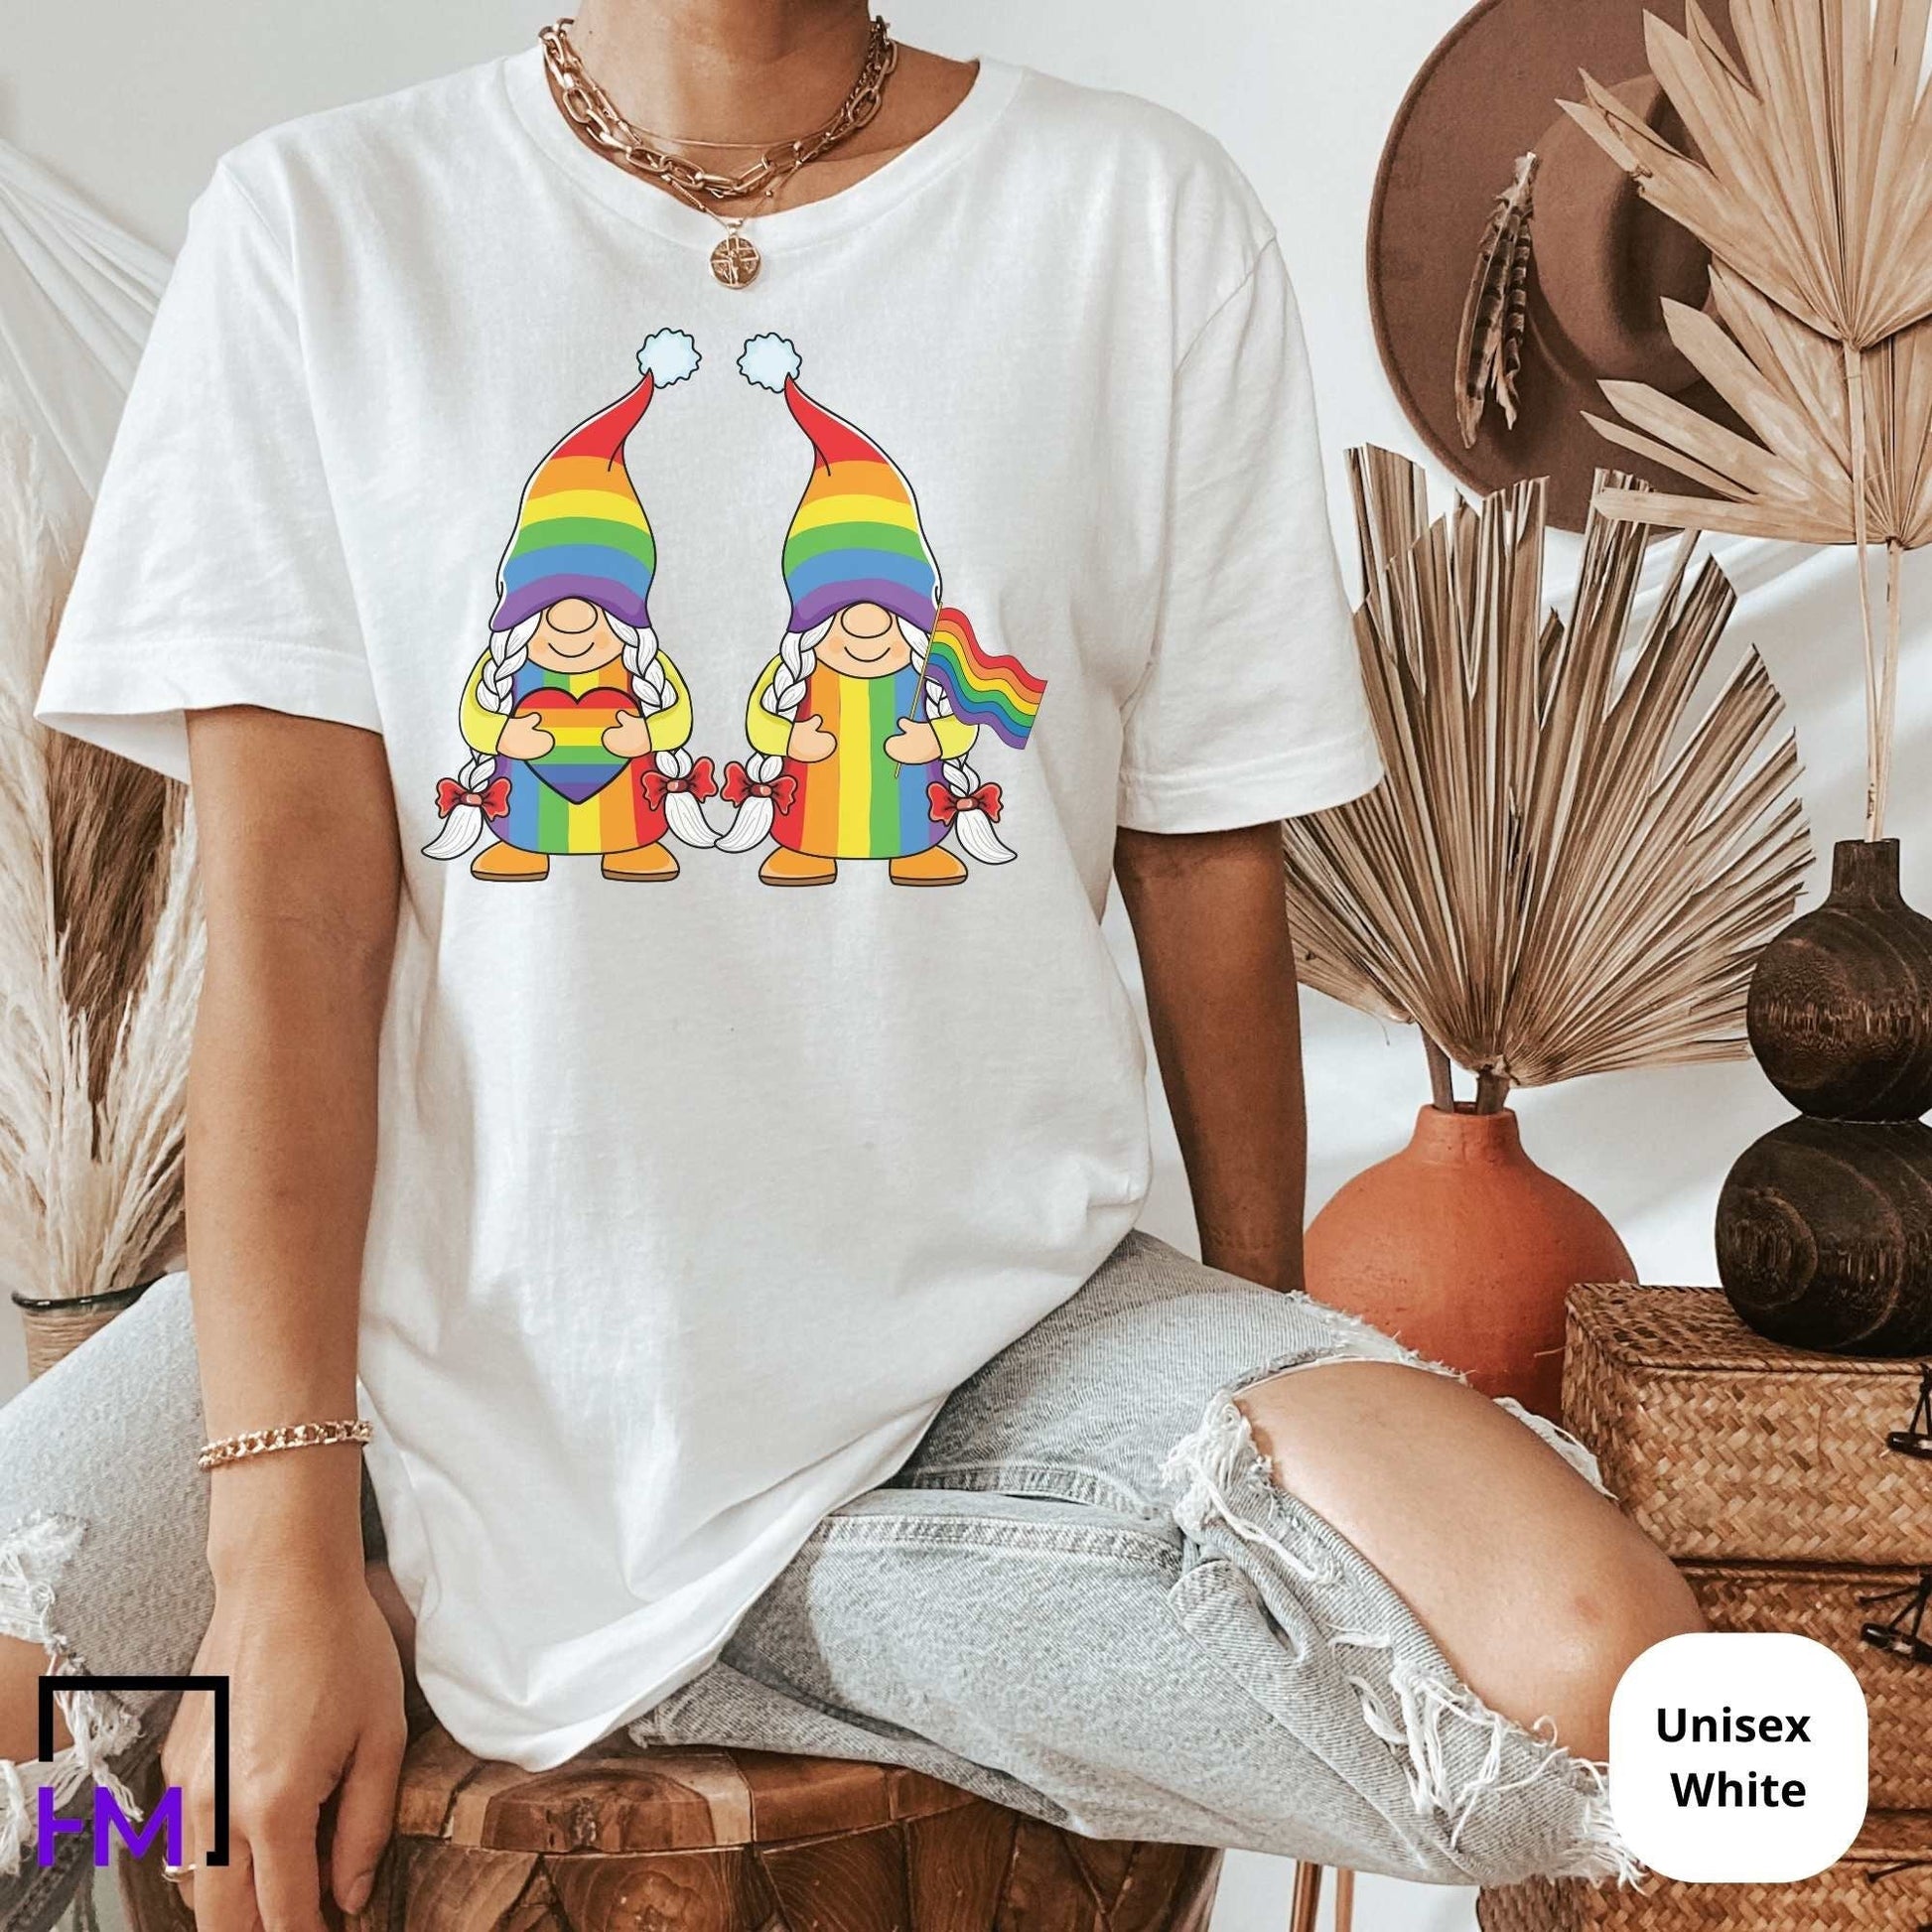 Pride Shirt, Gnomes Rainbow, Human Rights Love is Love Shirt, Retro Hippie Shirt, Equality T-Shirt, LGBTQ Support Shirts, LGBTQ Pride Shirts HMDesignStudioUS